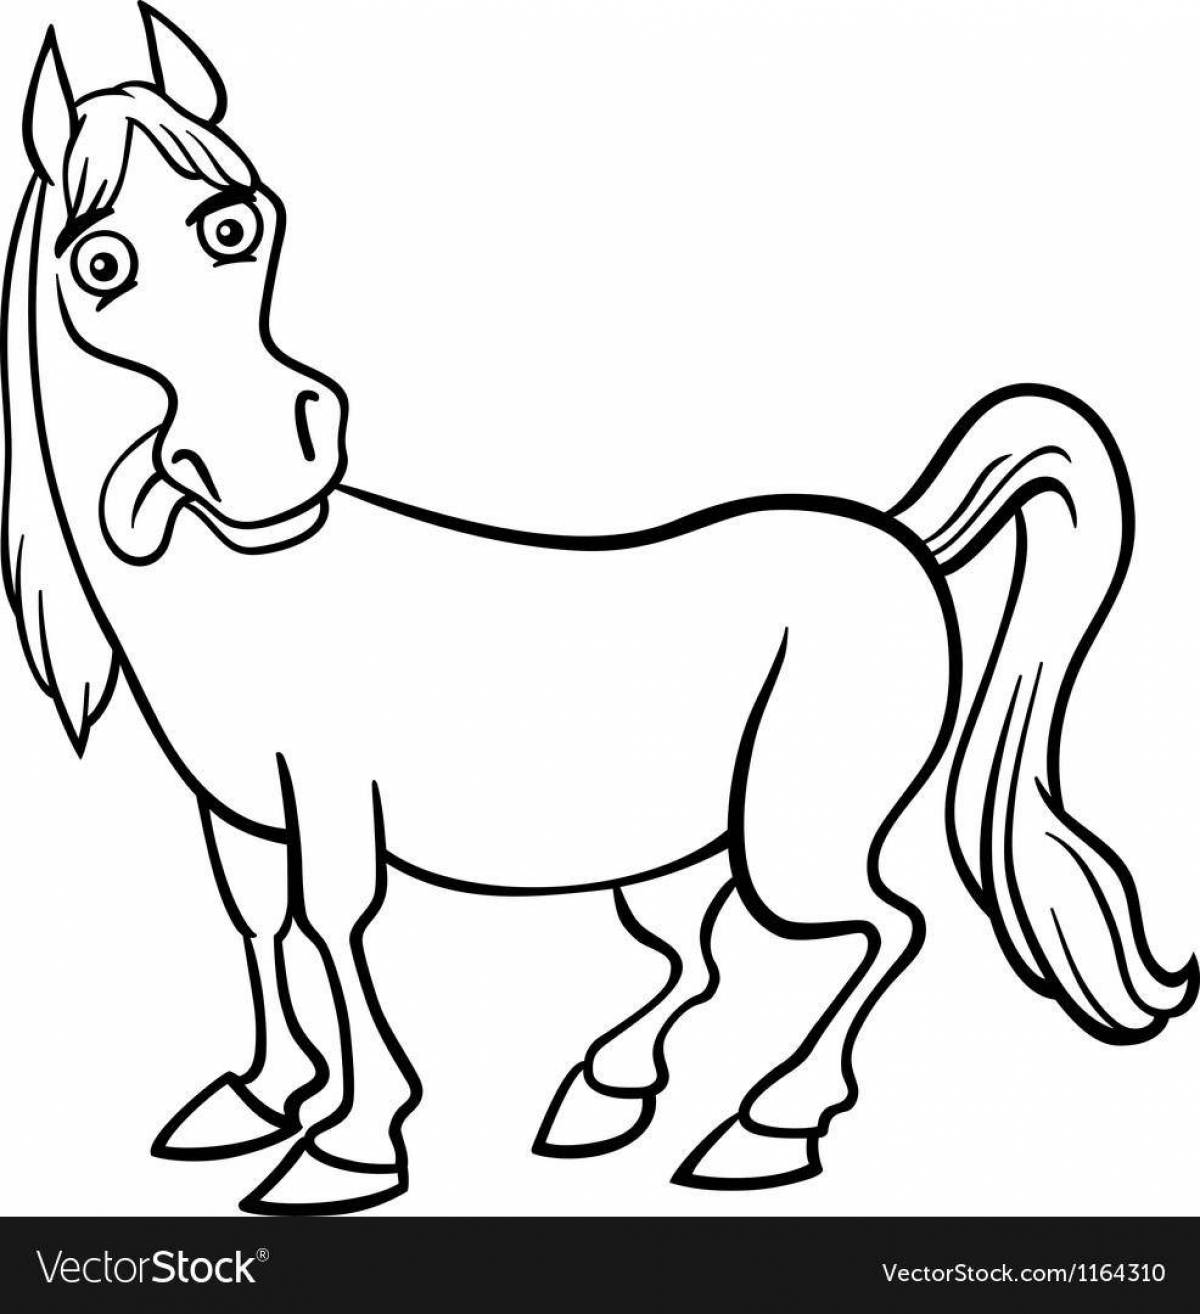 Coloring page adorable cartoon horse